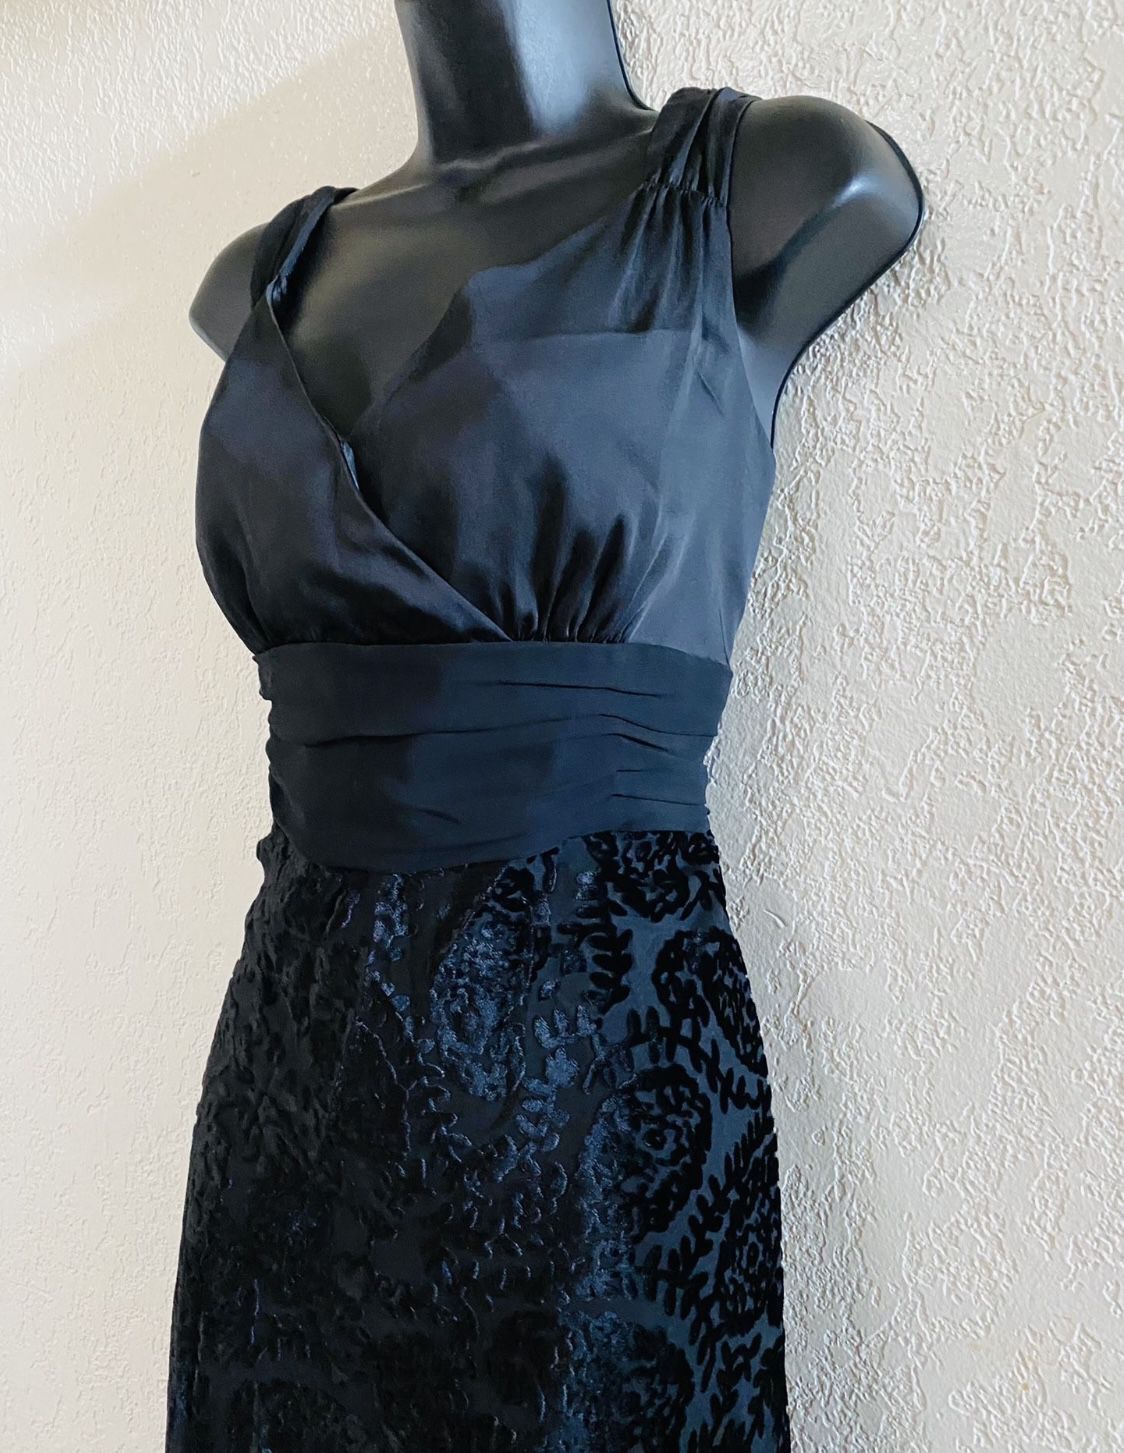 BANDOLINO, Black Midi Dress, Size 12 😍